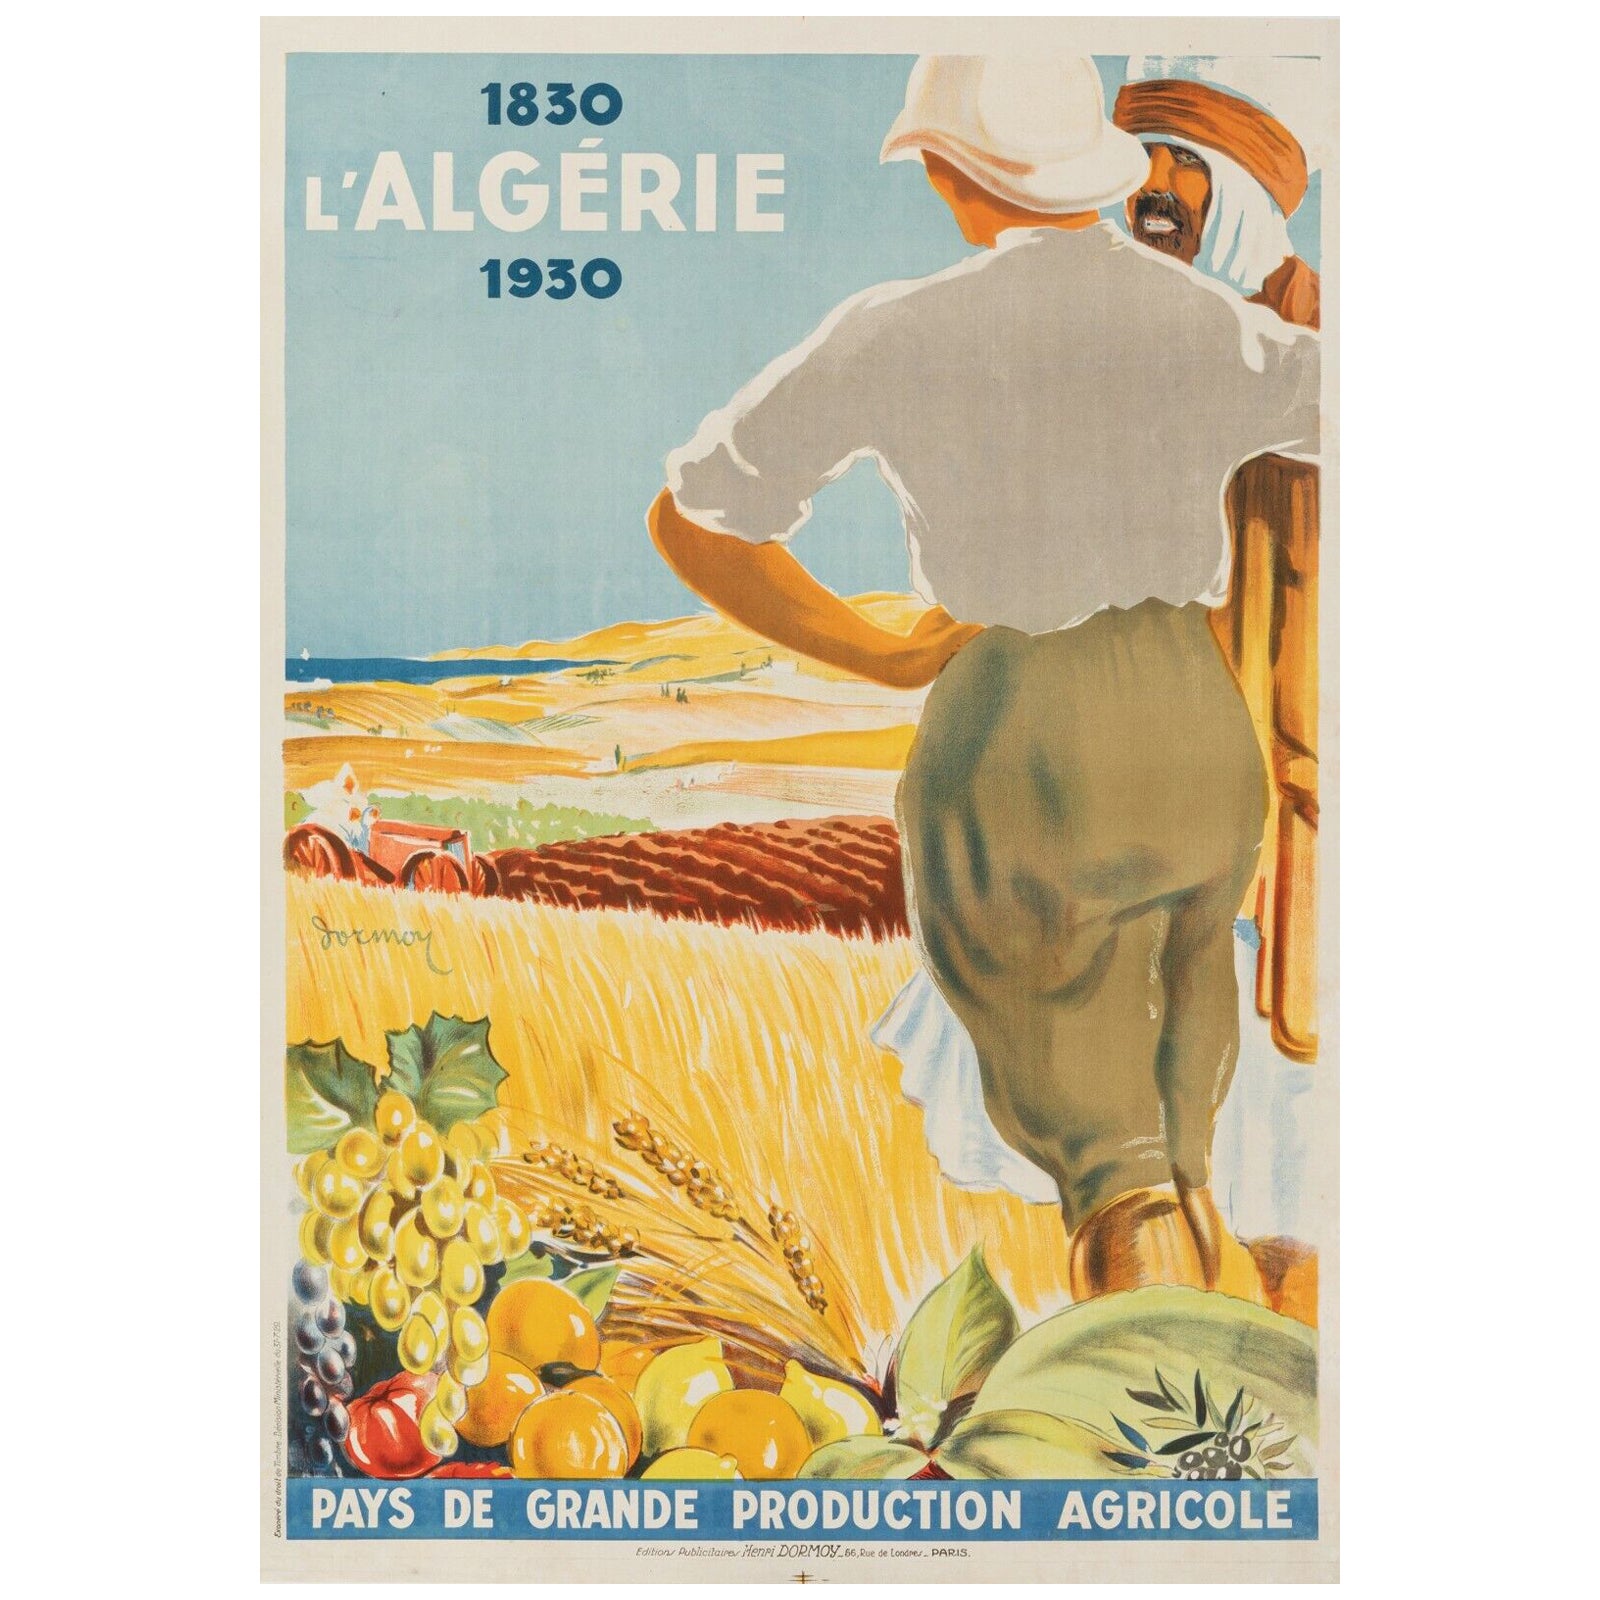 Original Colonial Poster-Dormoy-Algeria 1830 1930-Farmland, 1930 For Sale